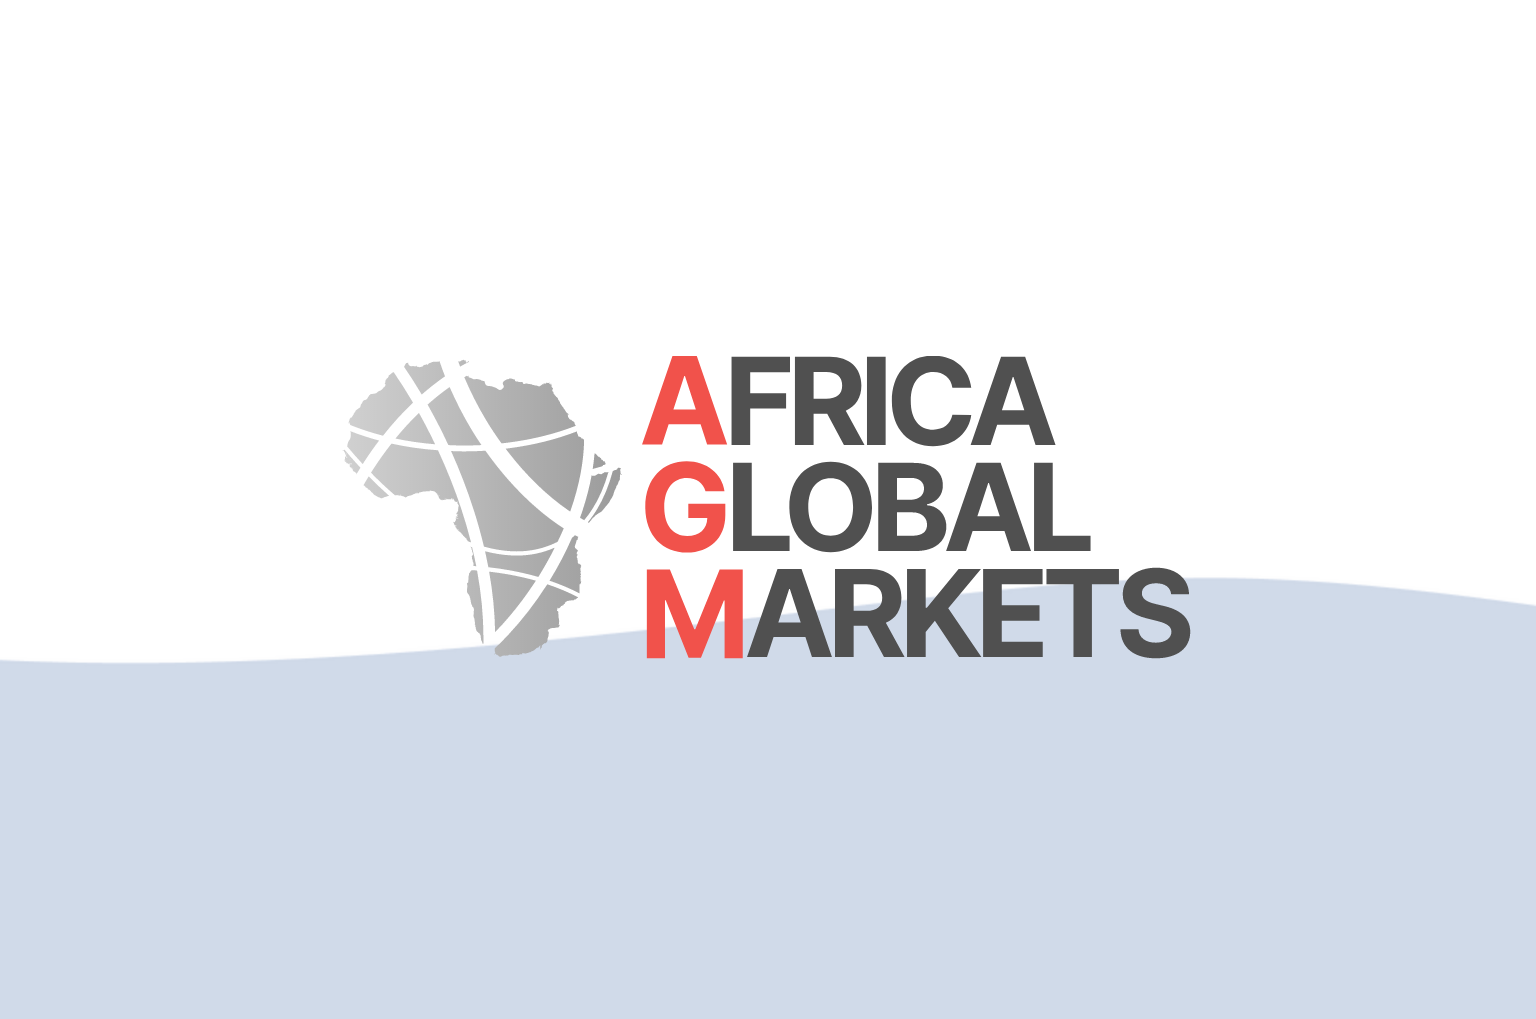 Africa Global Markets website logo